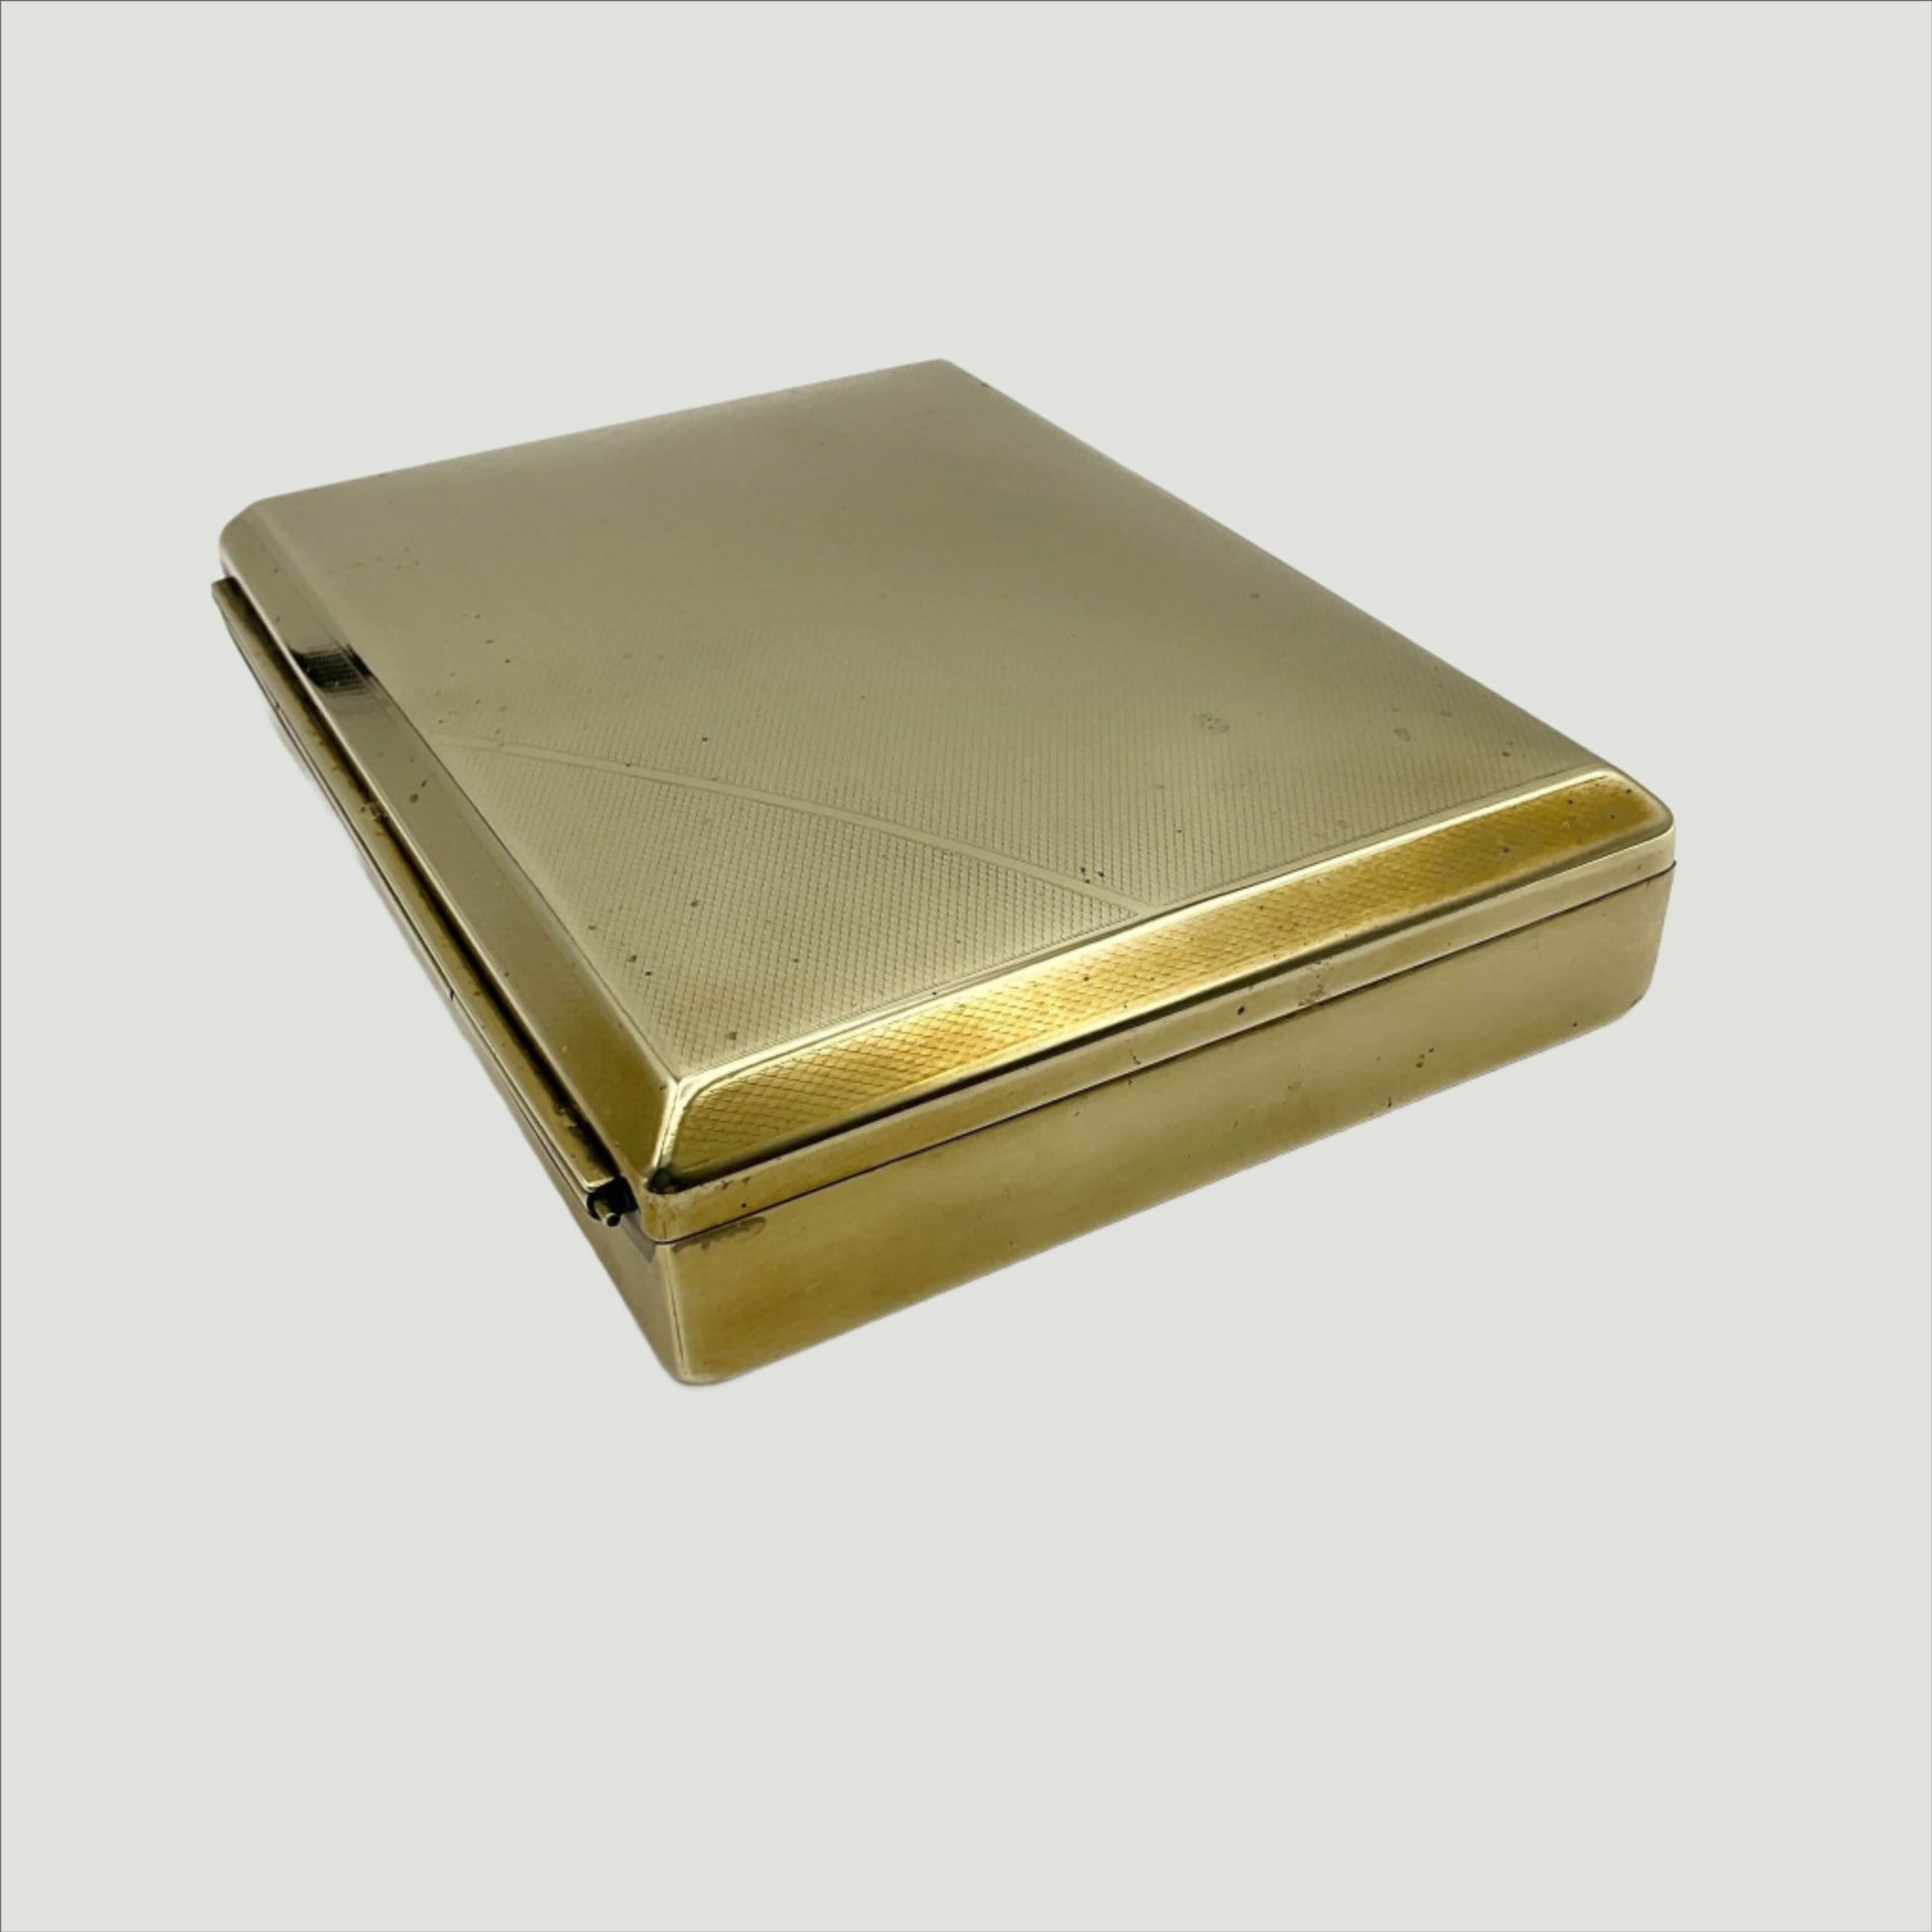 Side of brass box showing back hinge